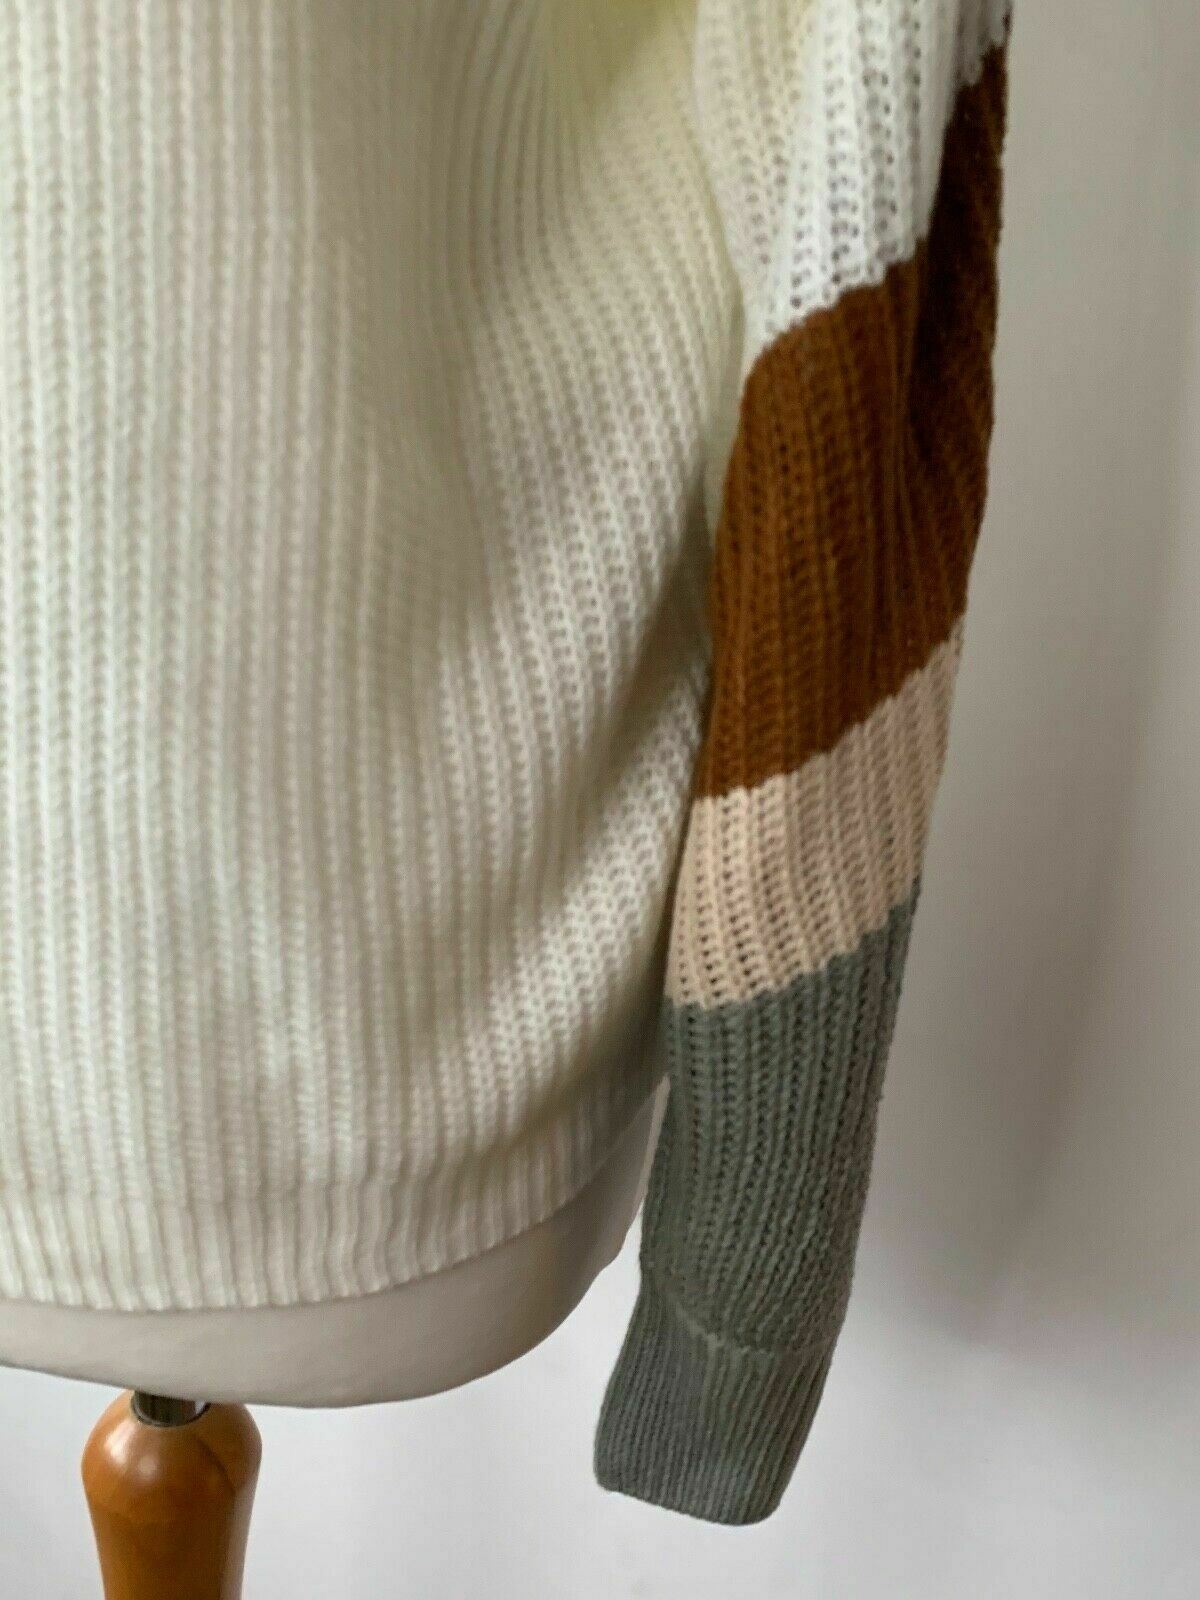 SHEIN Knit Sweater Striped Arms Size S 8 / 10 V-Neck Preppy Jumper